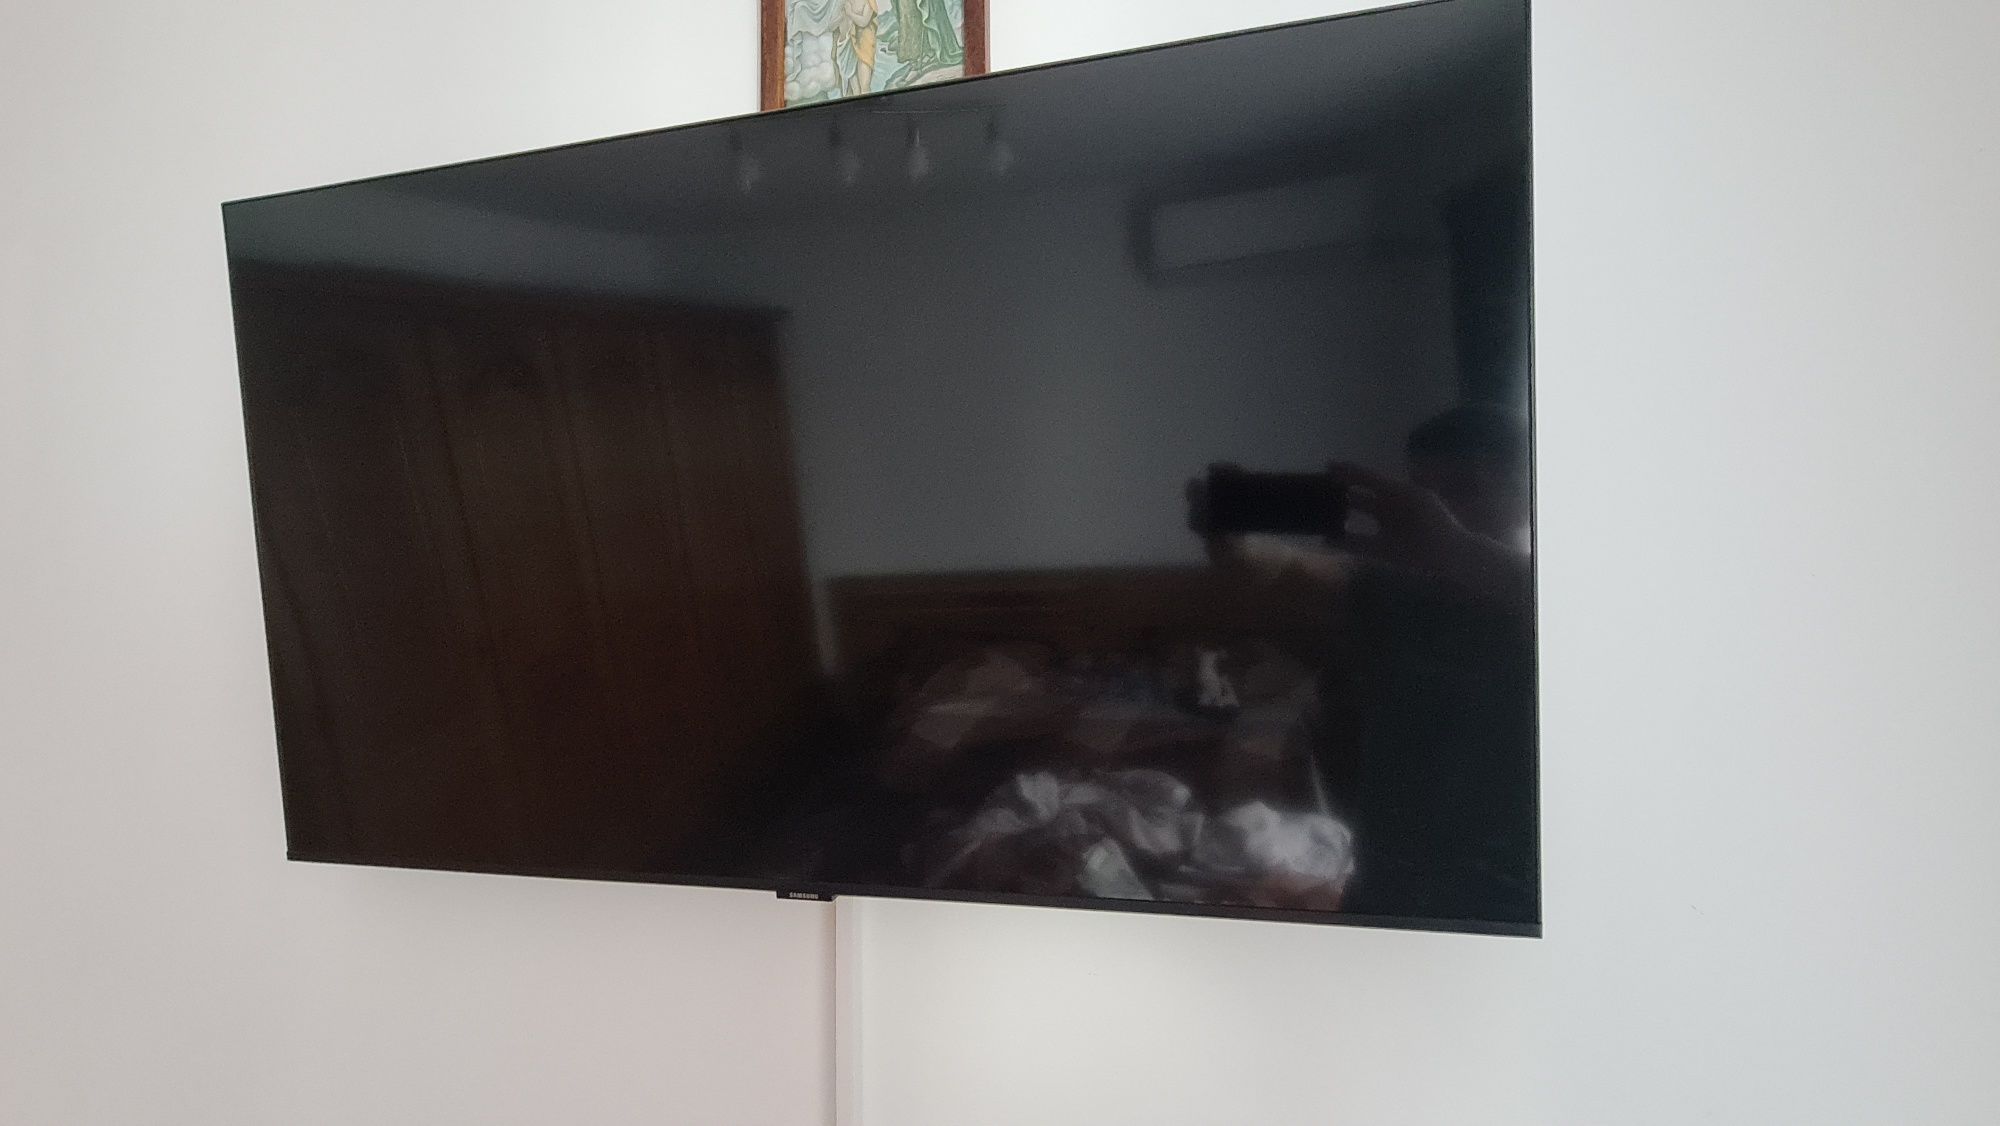 Tv smart samsung 4k ultra hd 108 cm